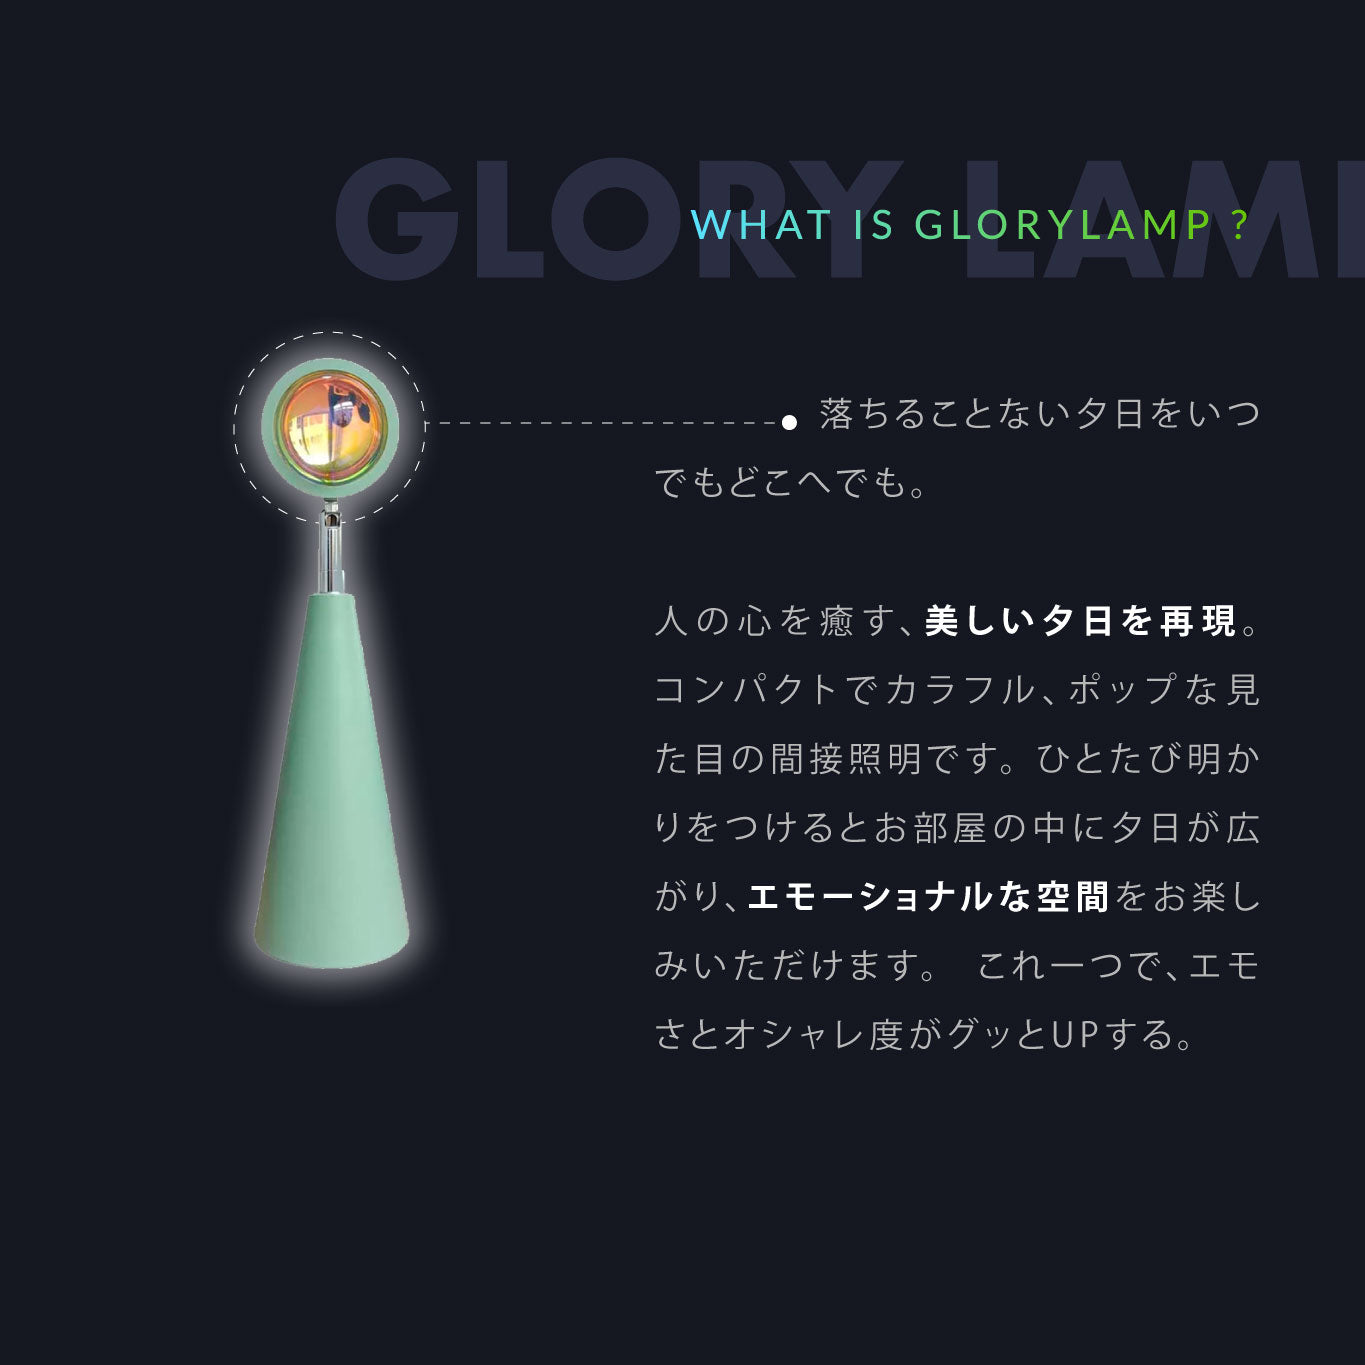 【在庫限り】Glory Lamp Mini